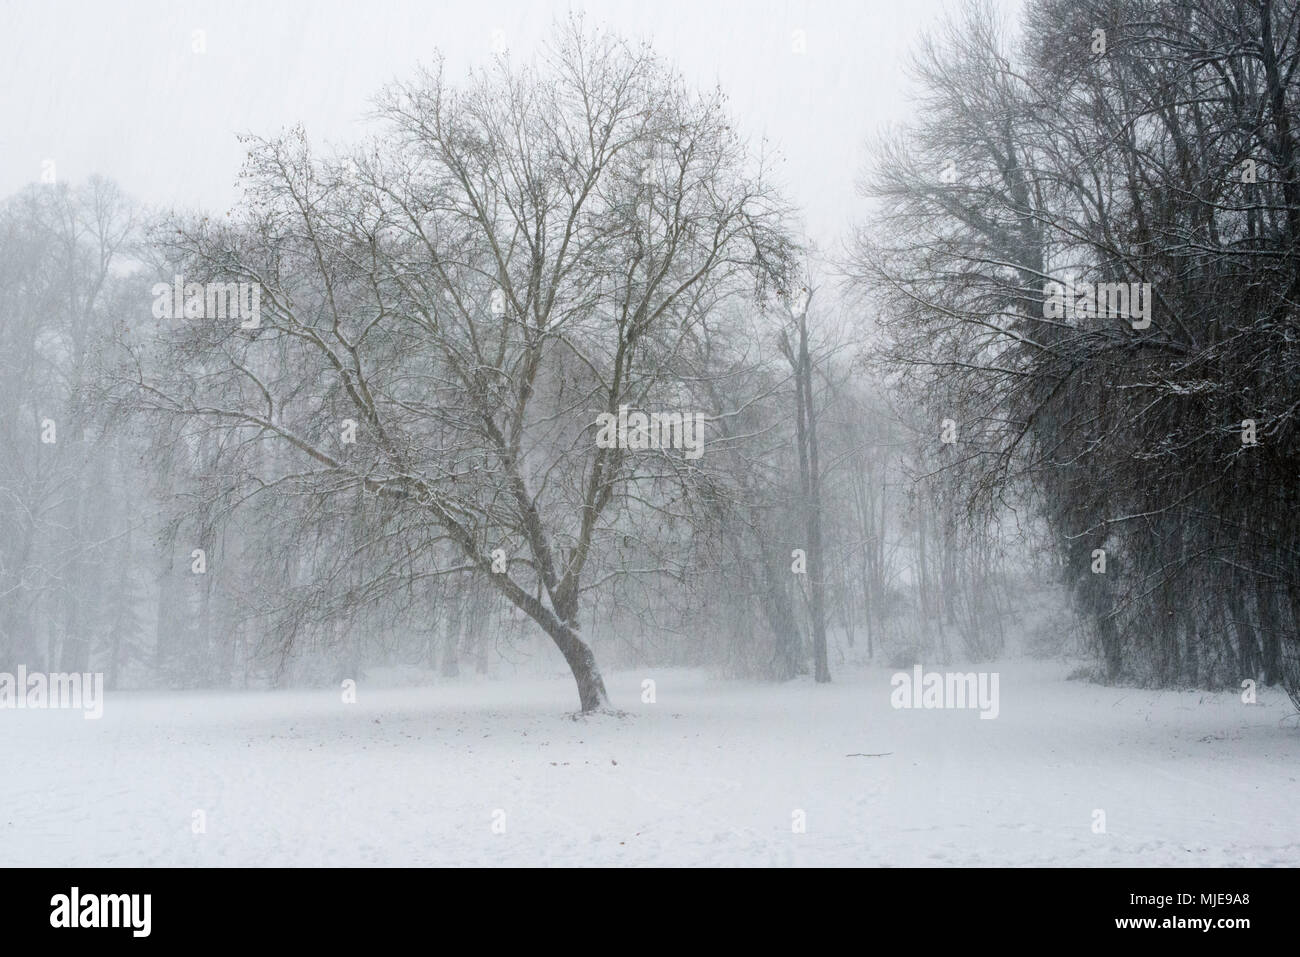 Snow drifting in the park, snowfall Stock Photo